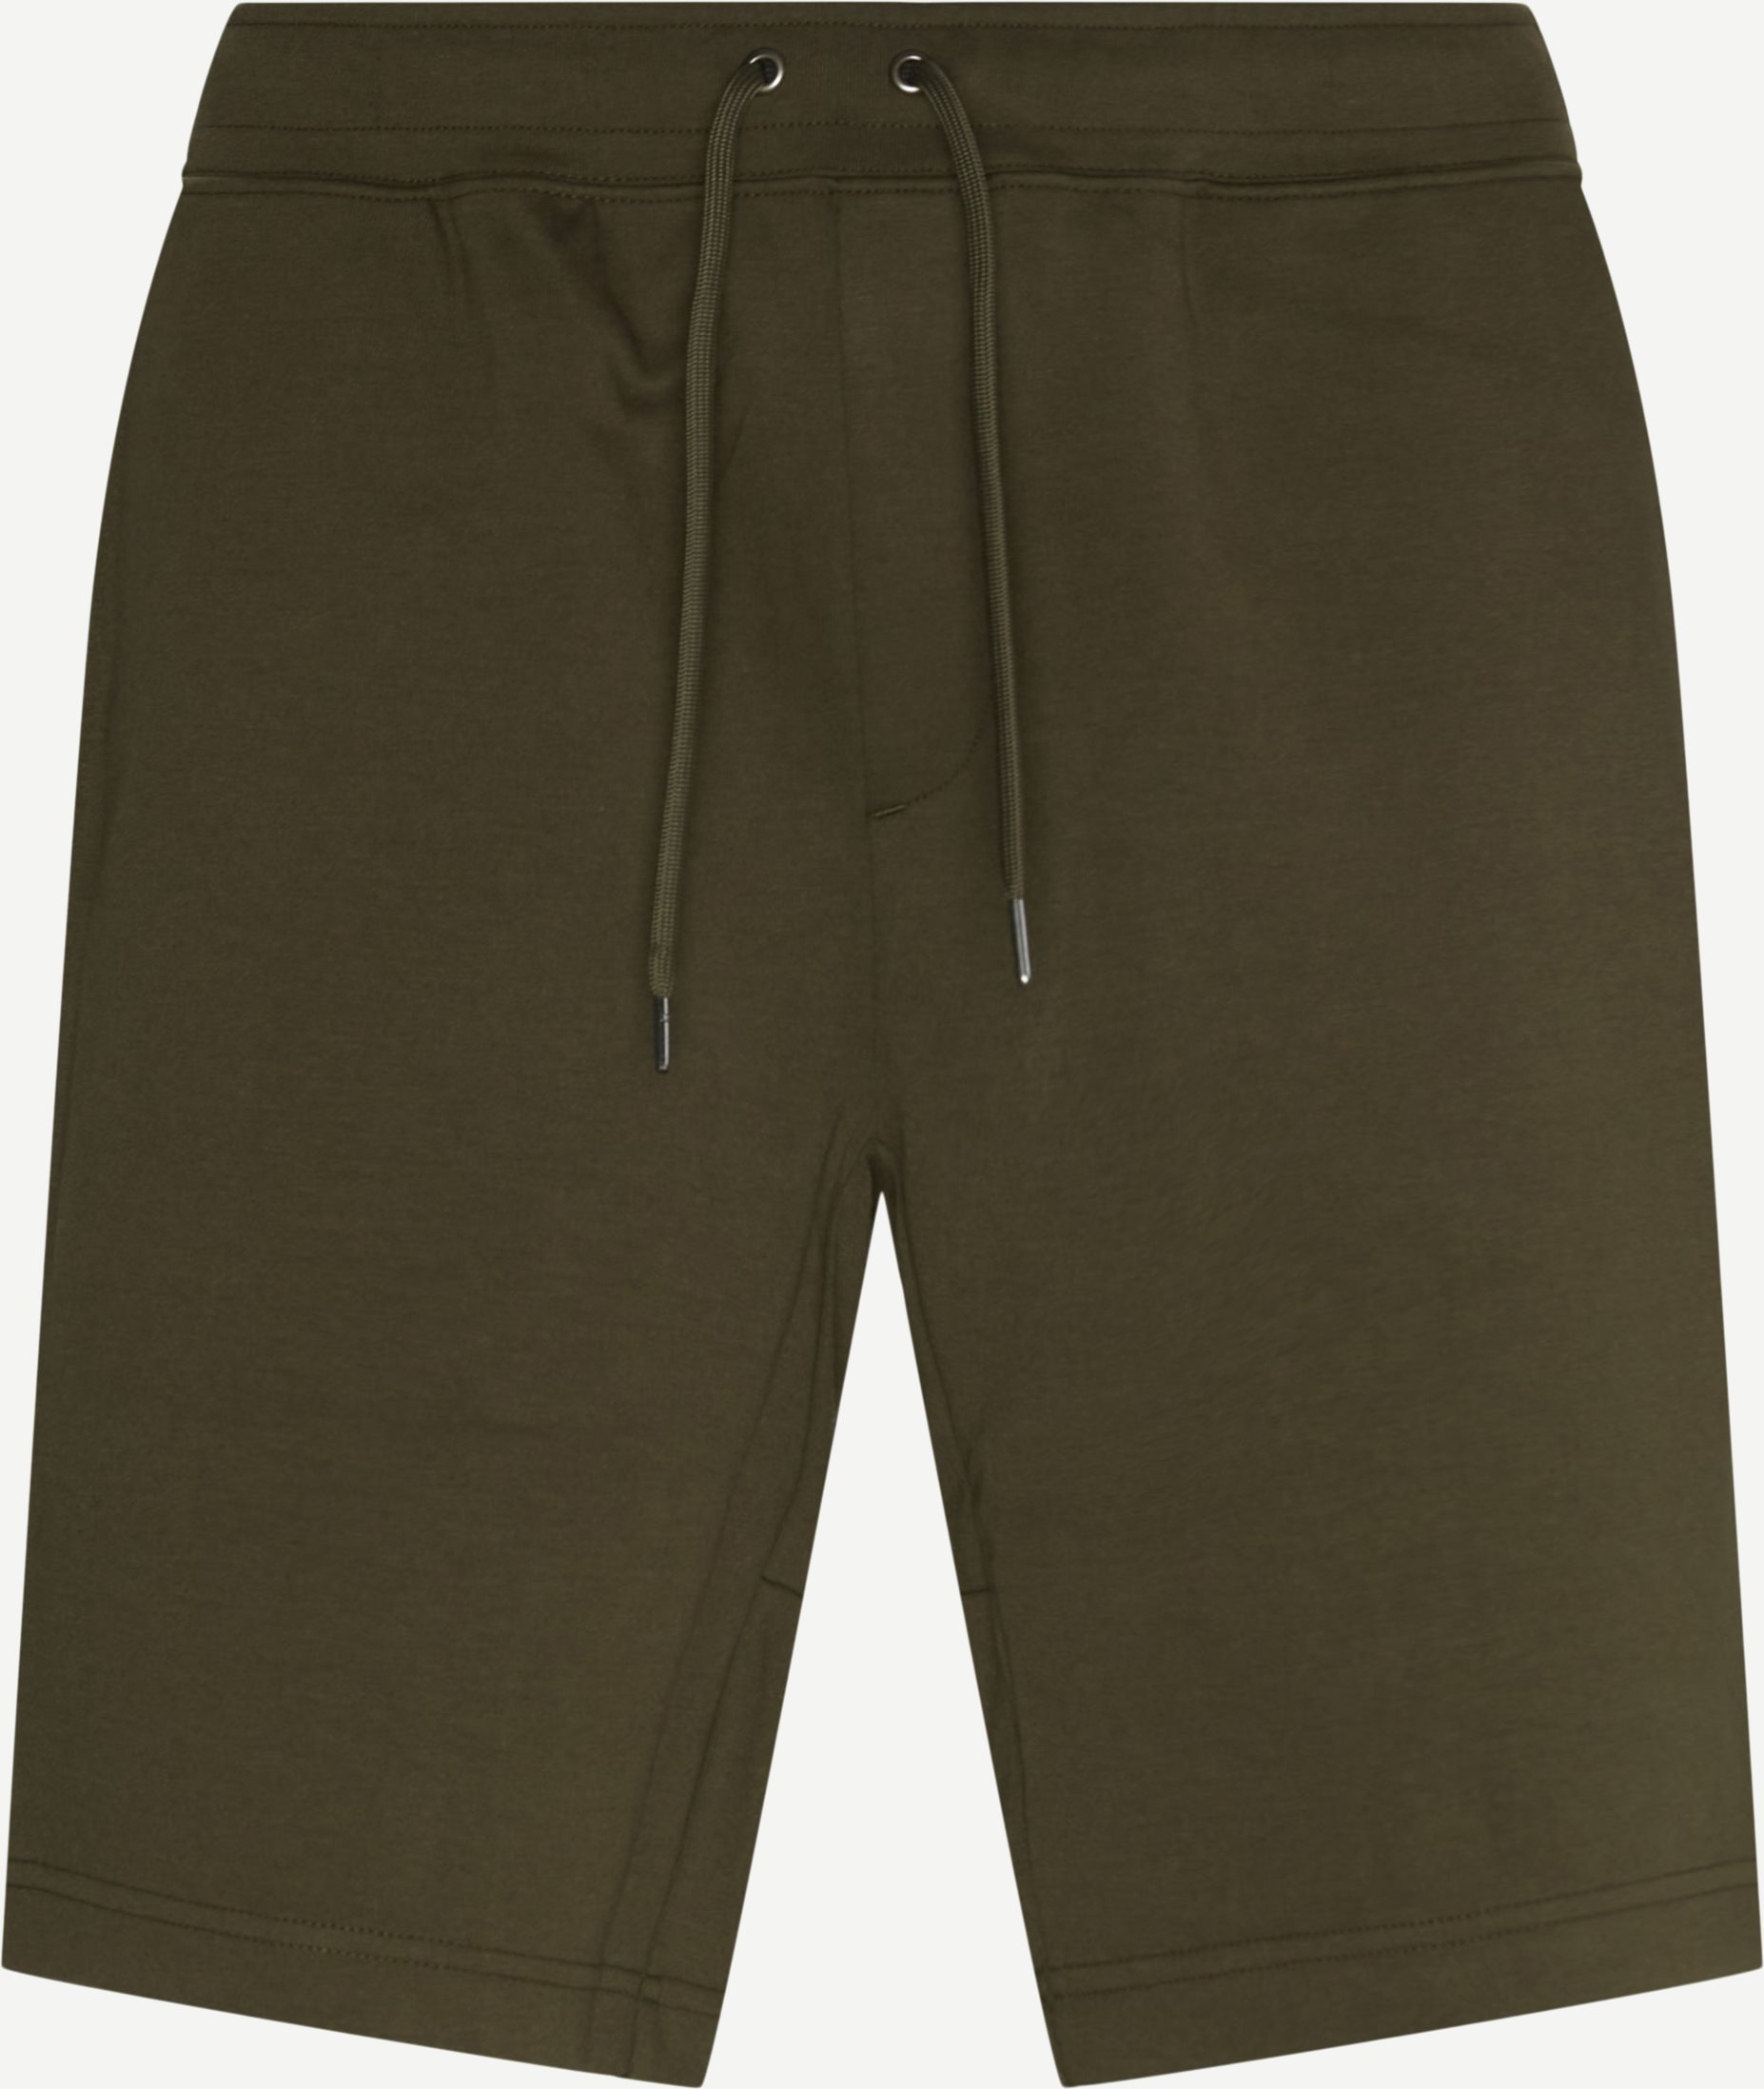 Bomullsshorts - Shorts - Regular fit - Armé